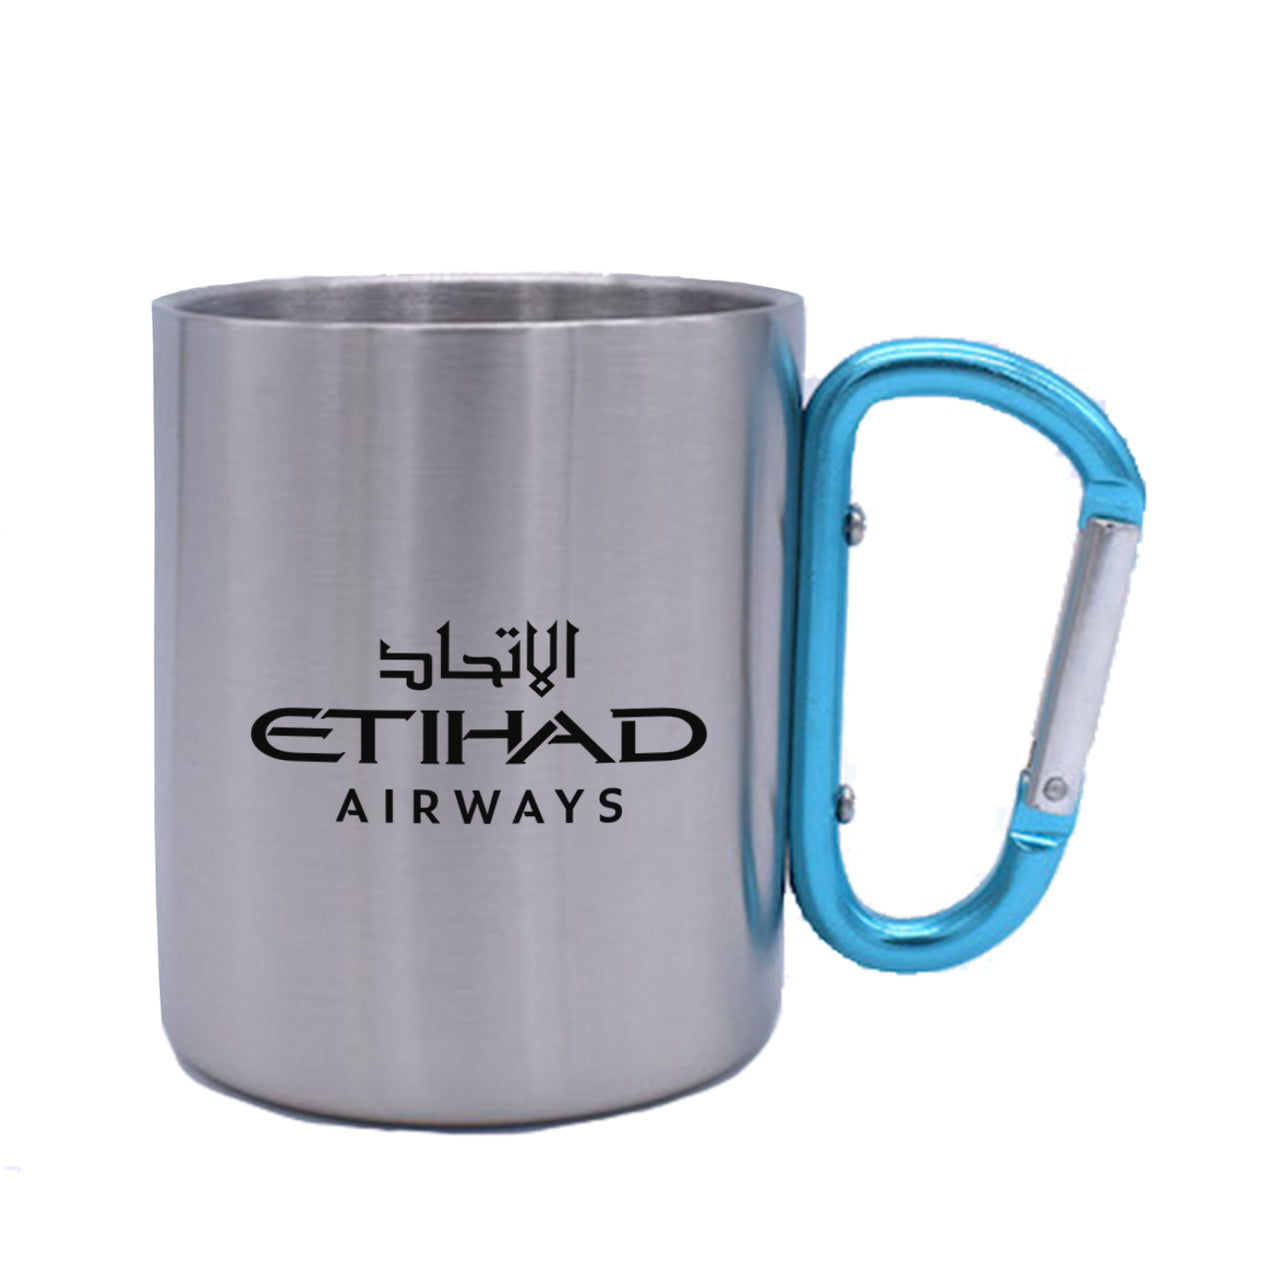 Etihad Airways Airlines Designed Stainless Steel Outdoors Mugs